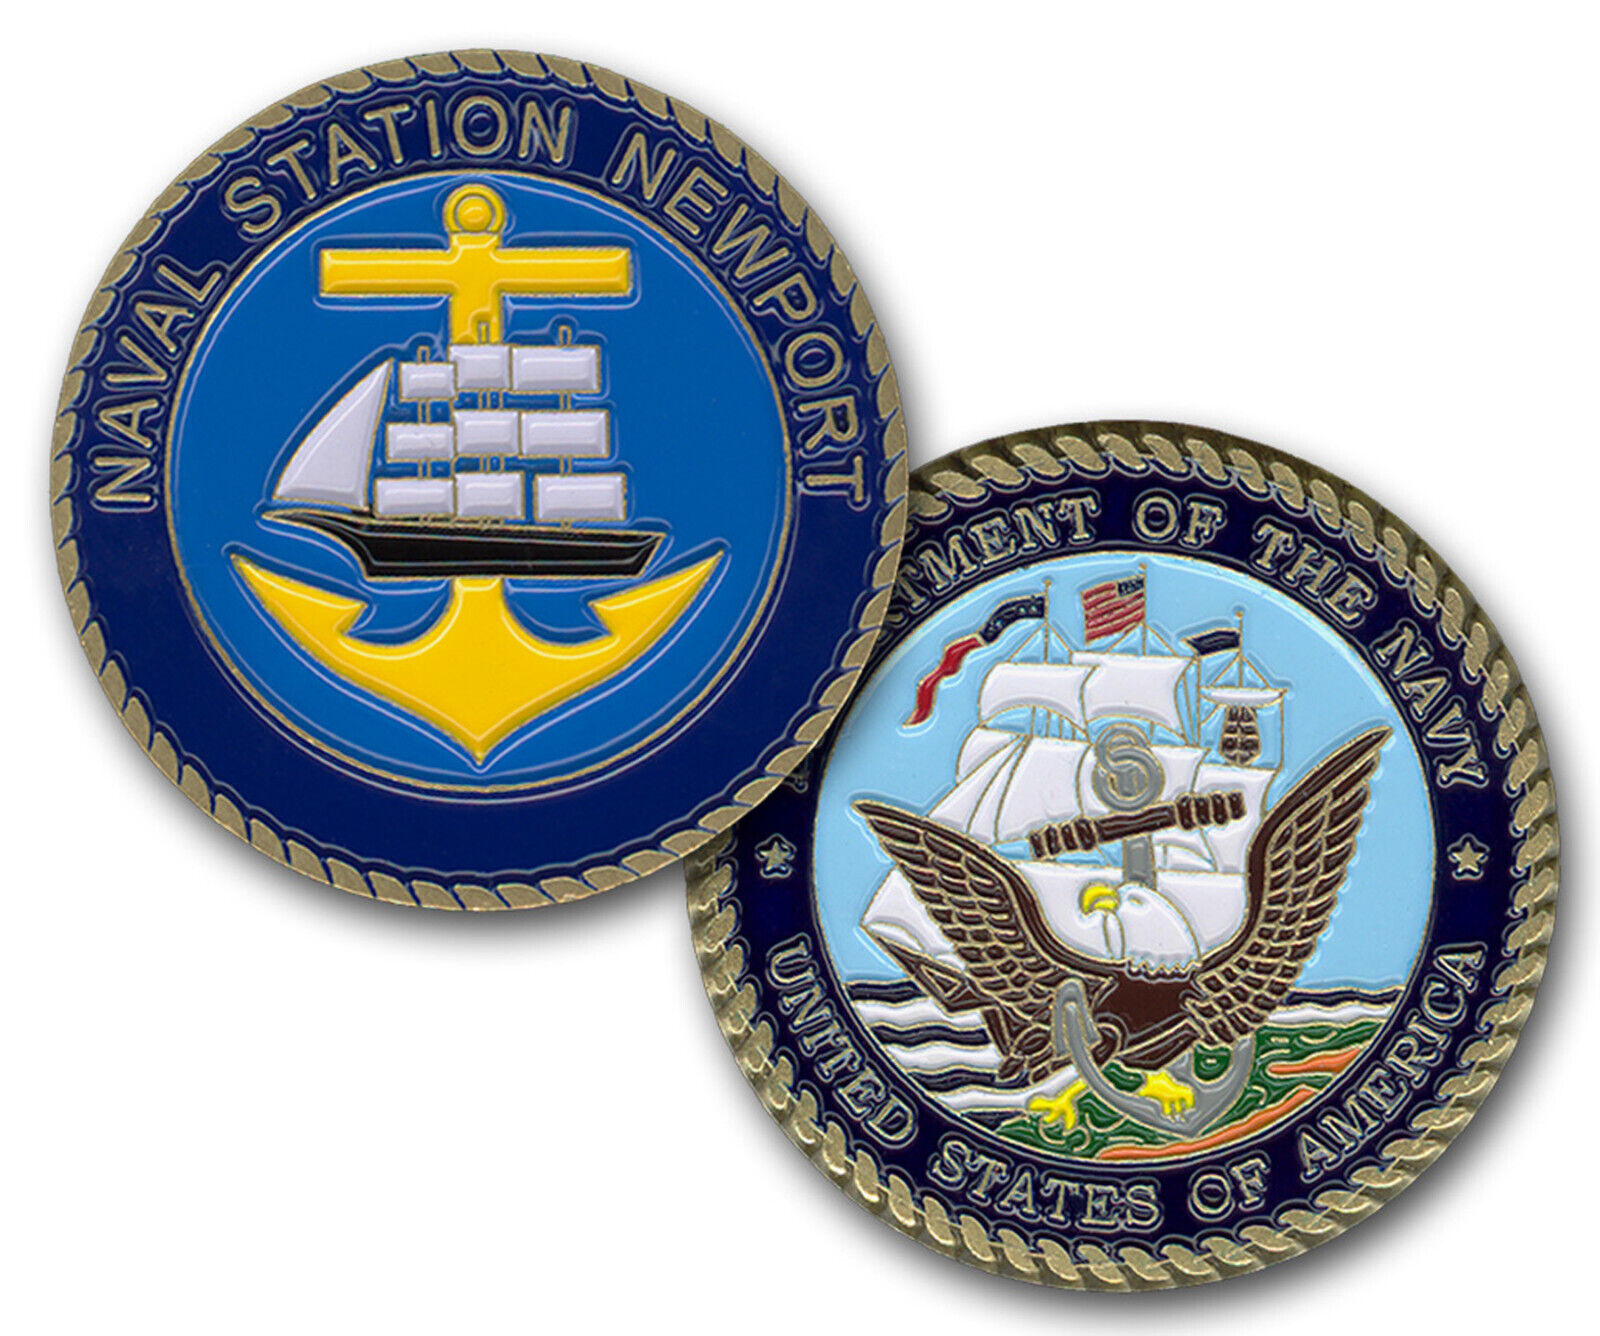 US Navy Naval Station Newport Rhode Island Challenge Coin